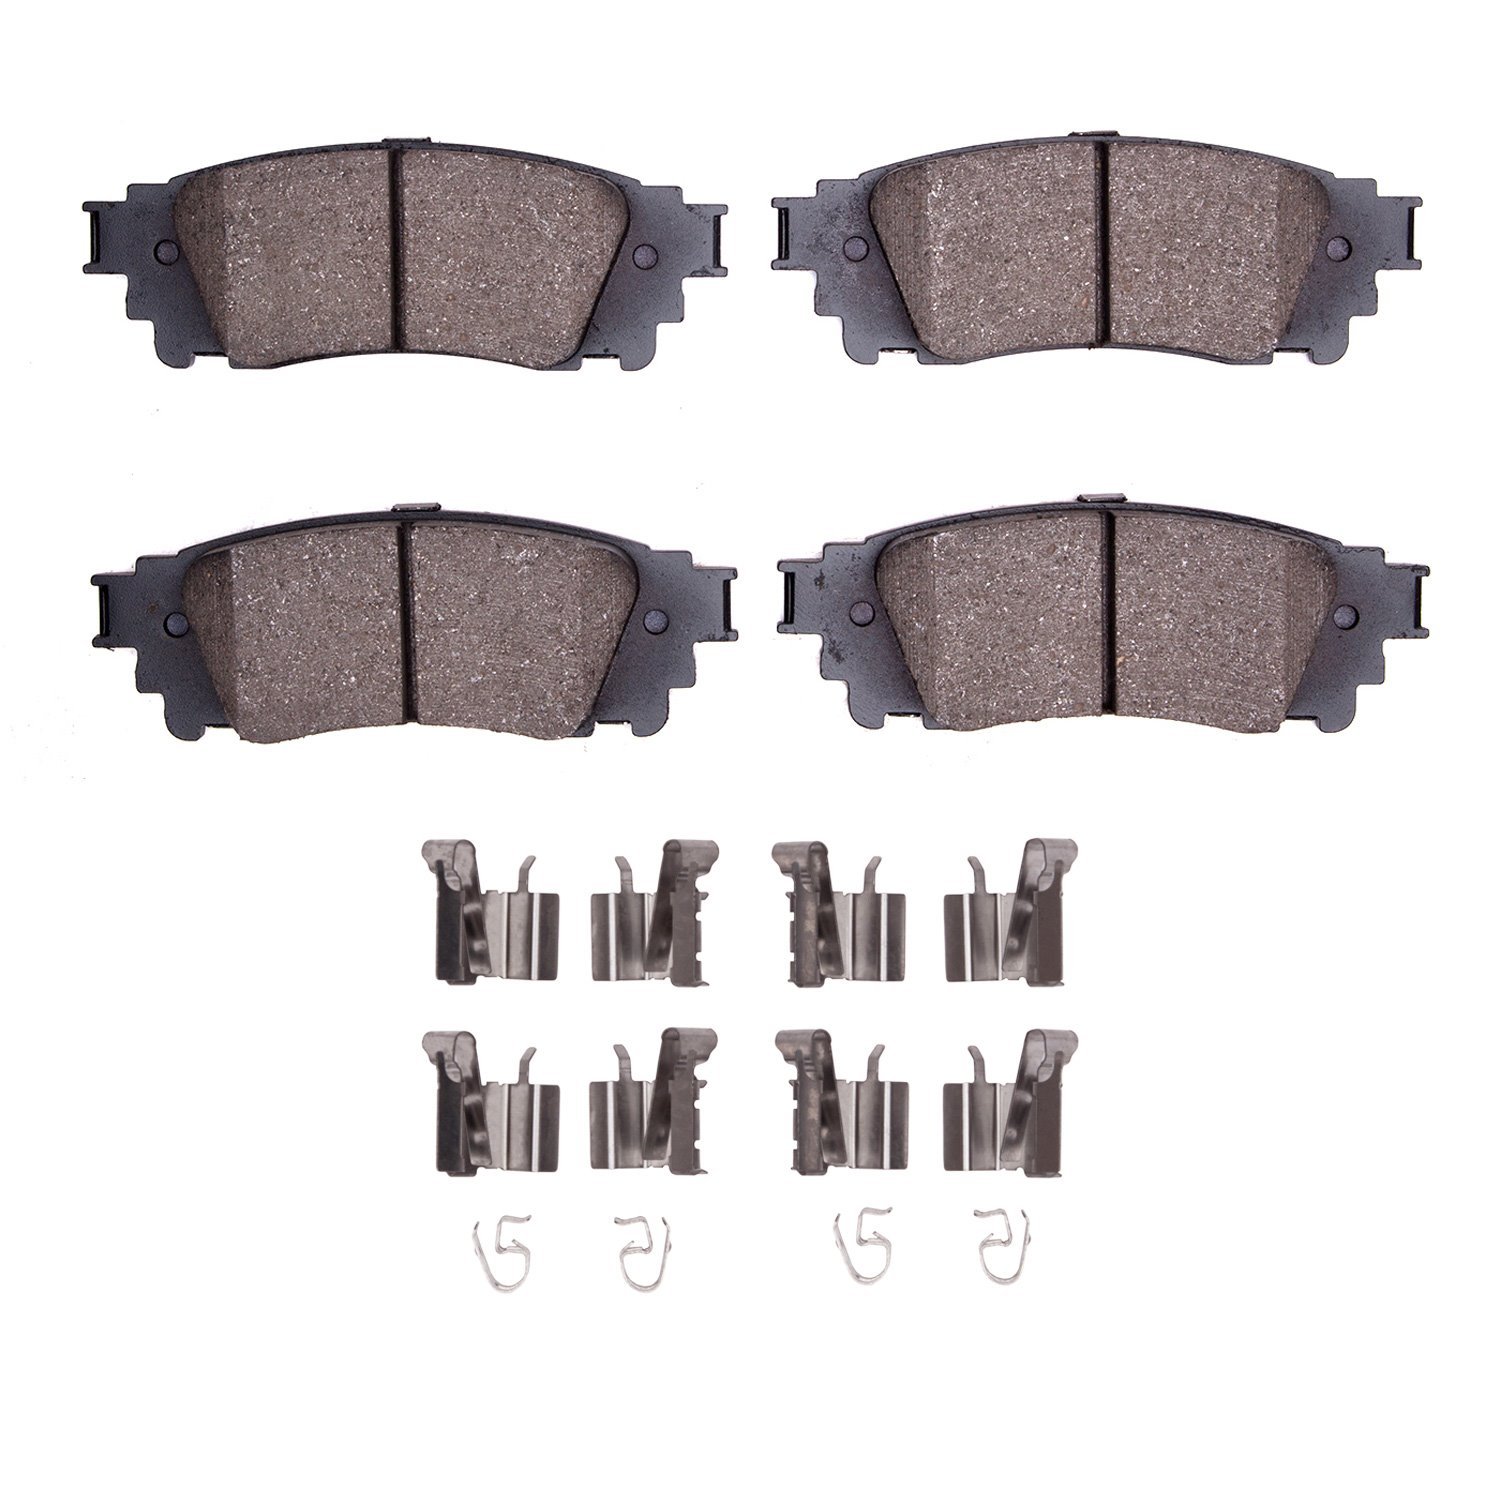 1310-1805-01 3000-Series Ceramic Brake Pads & Hardware Kit, Fits Select Lexus/Toyota/Scion, Position: Rear